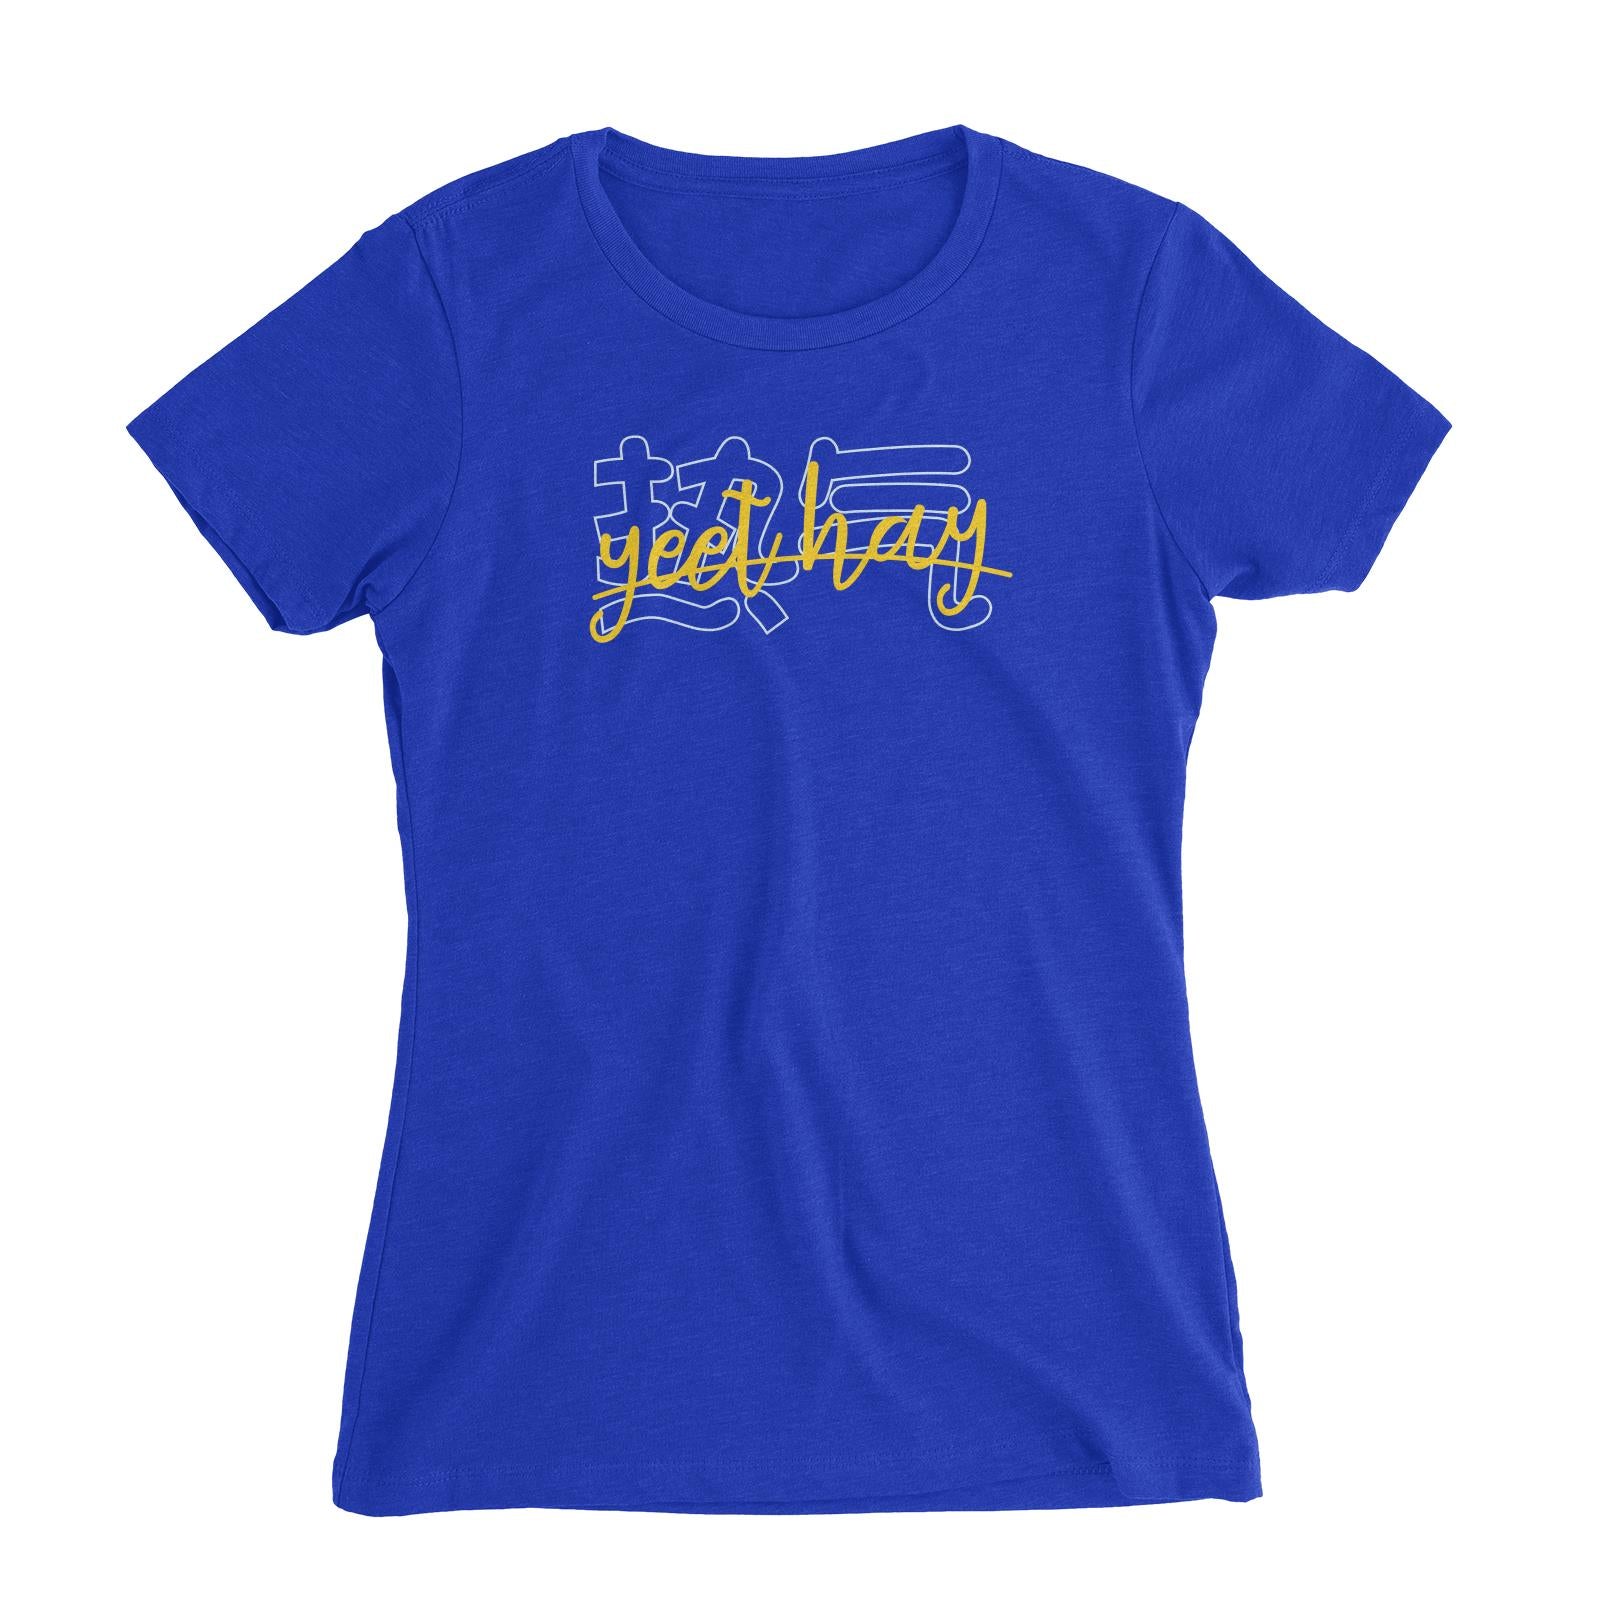 Slang Statement Yeet Hay Women's Slim Fit T-Shirt